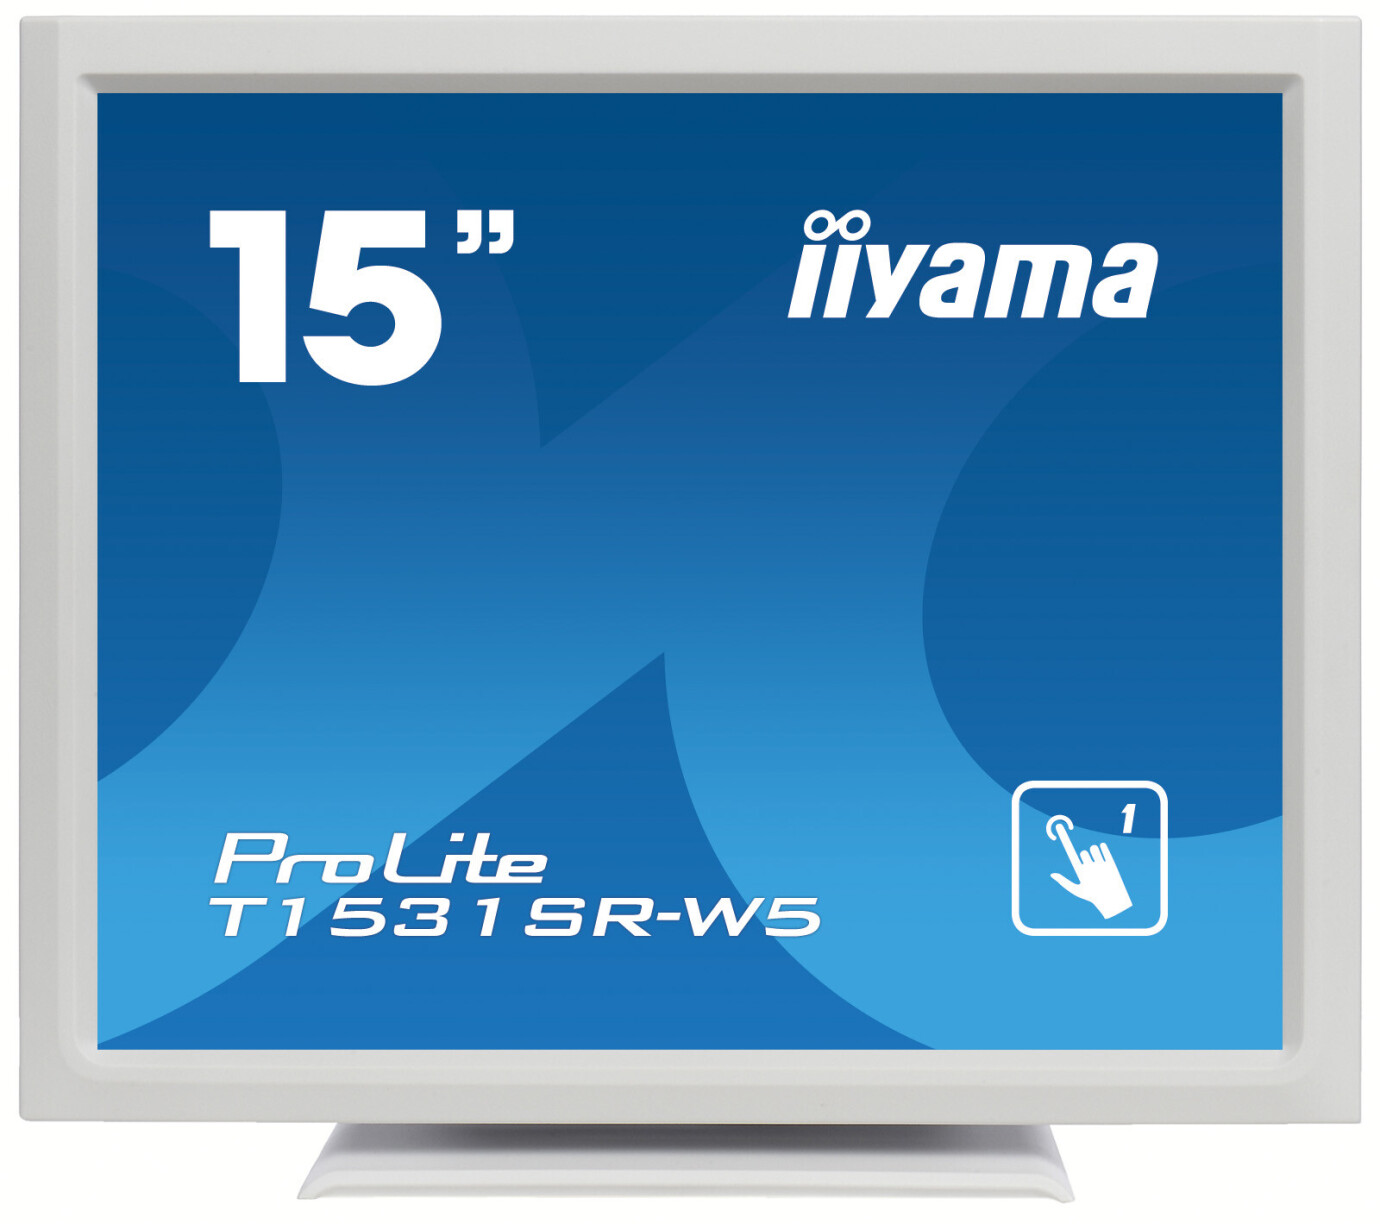 iiyama PROLITE T1531SR-W5 15" LED Monitor mit XGA und 8ms